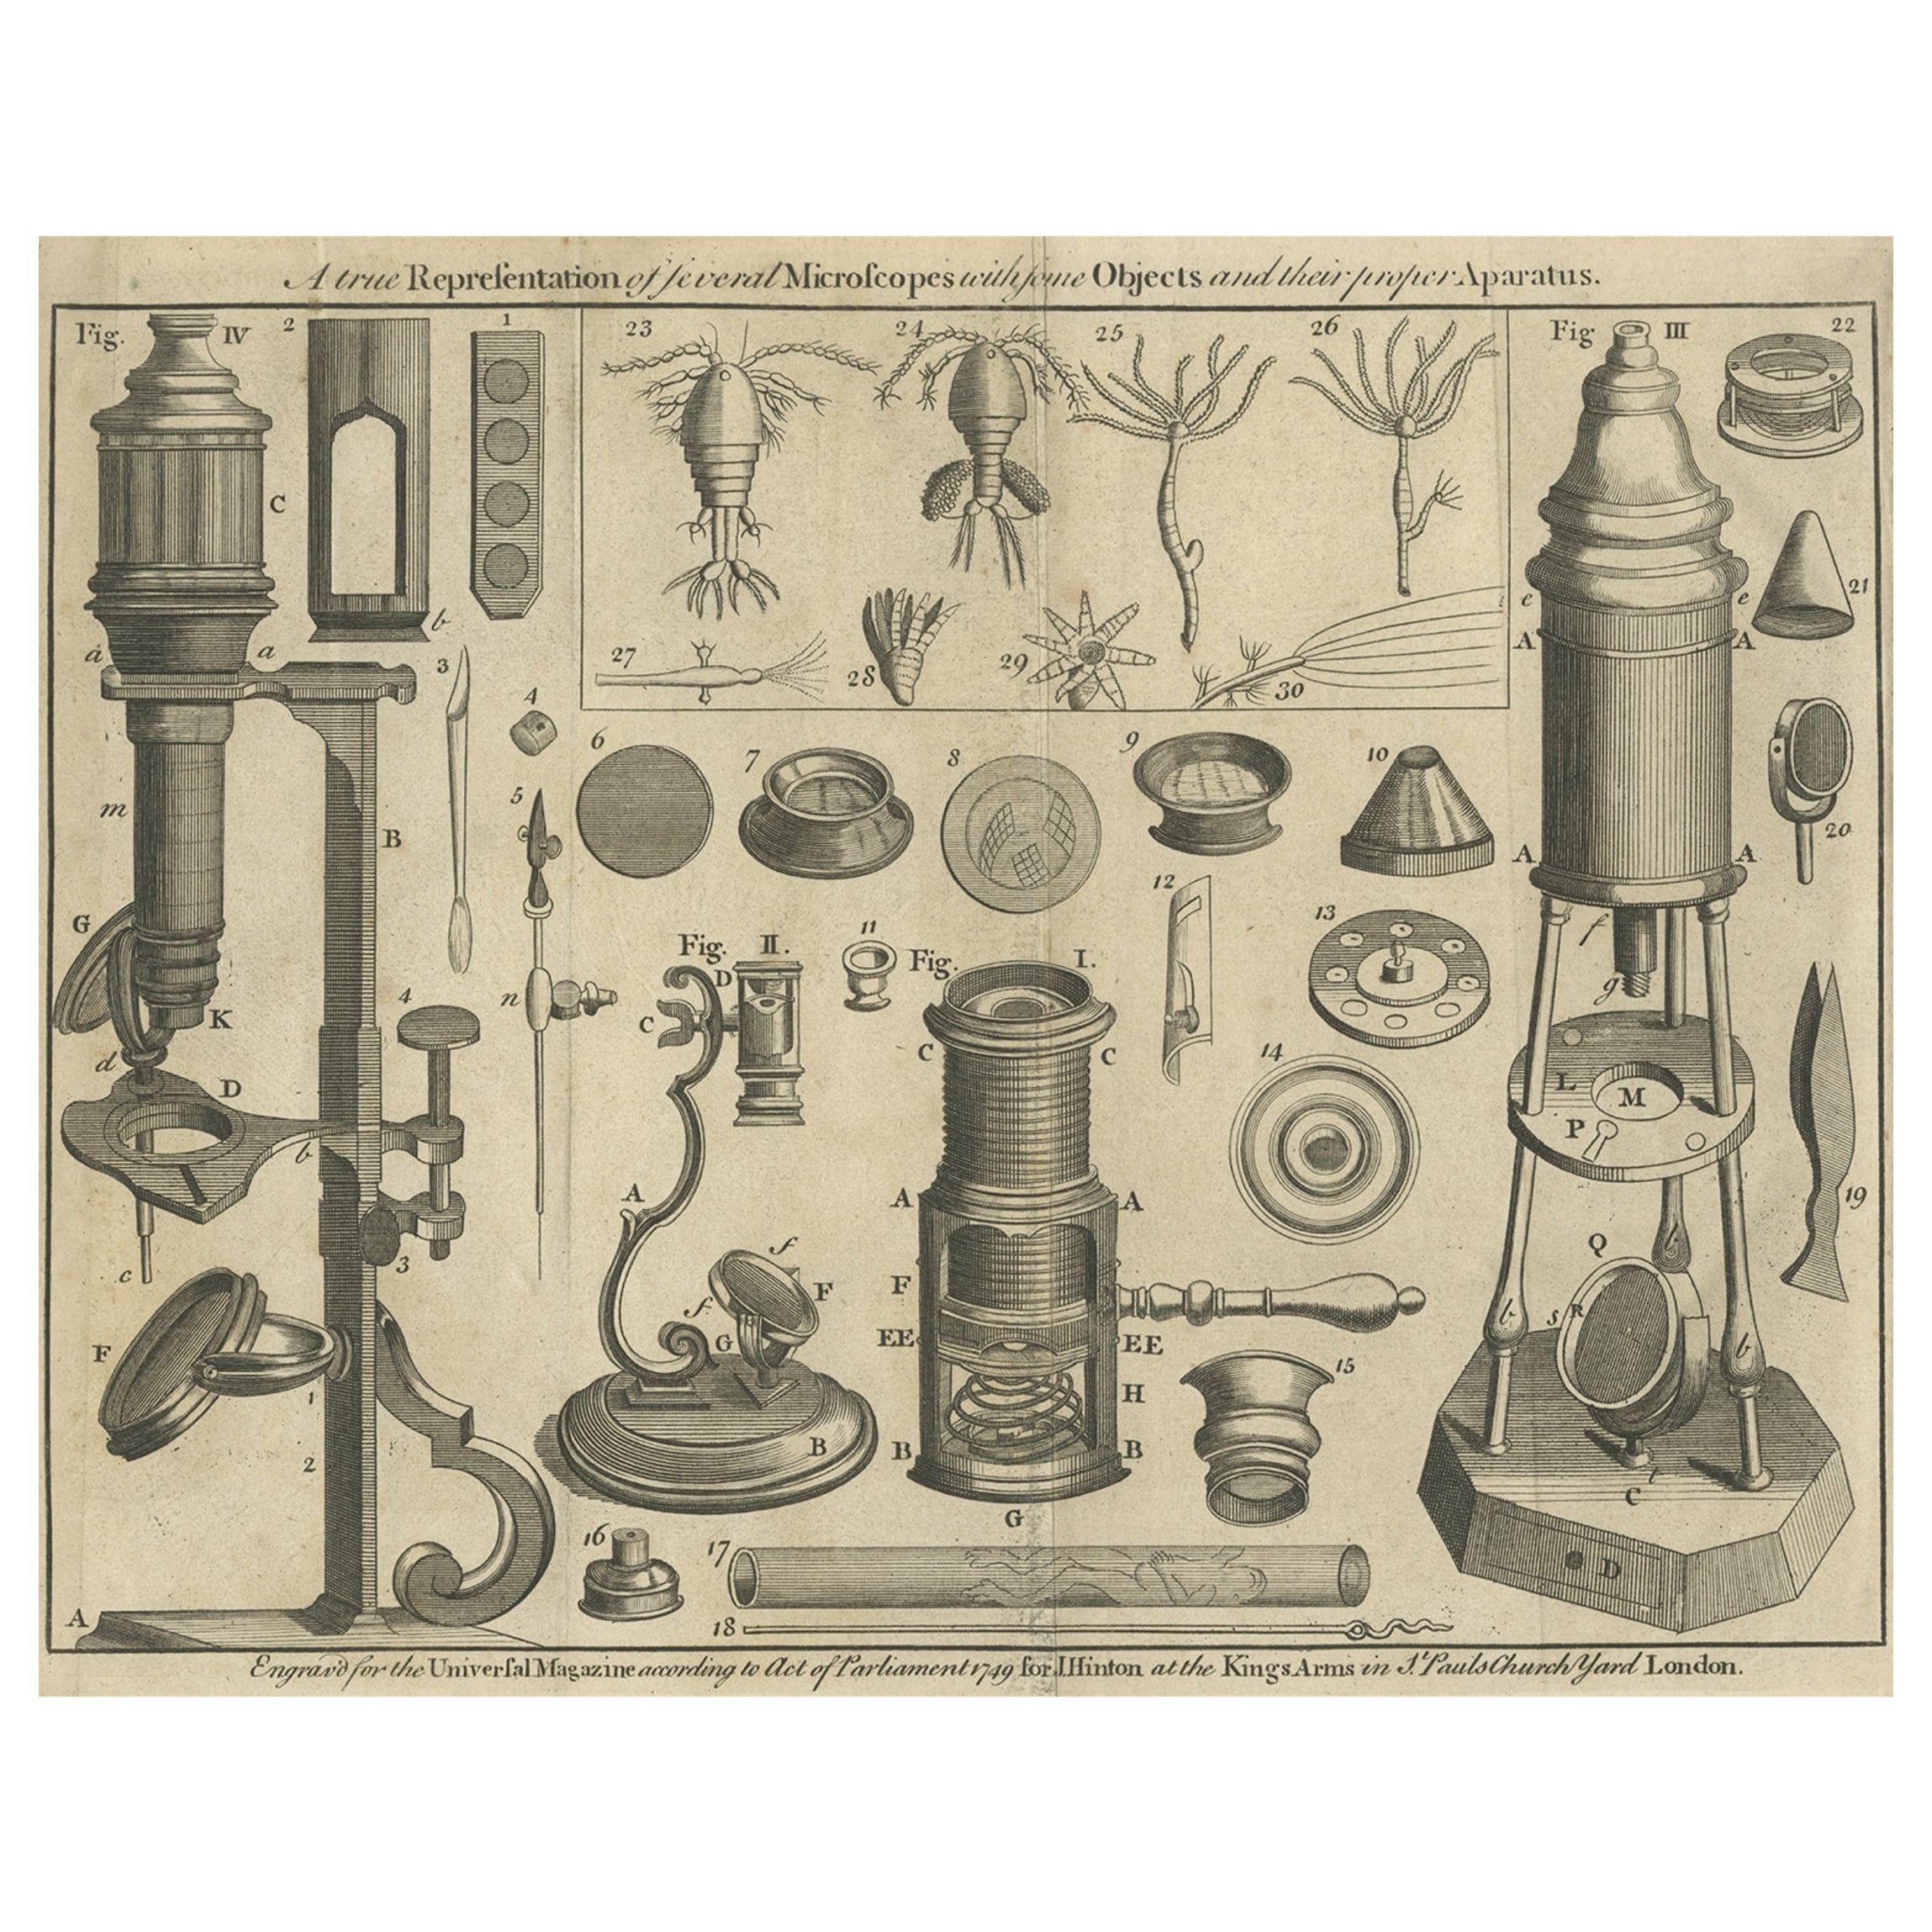 Seltene antike Gravur von Mikroskopen, 1749